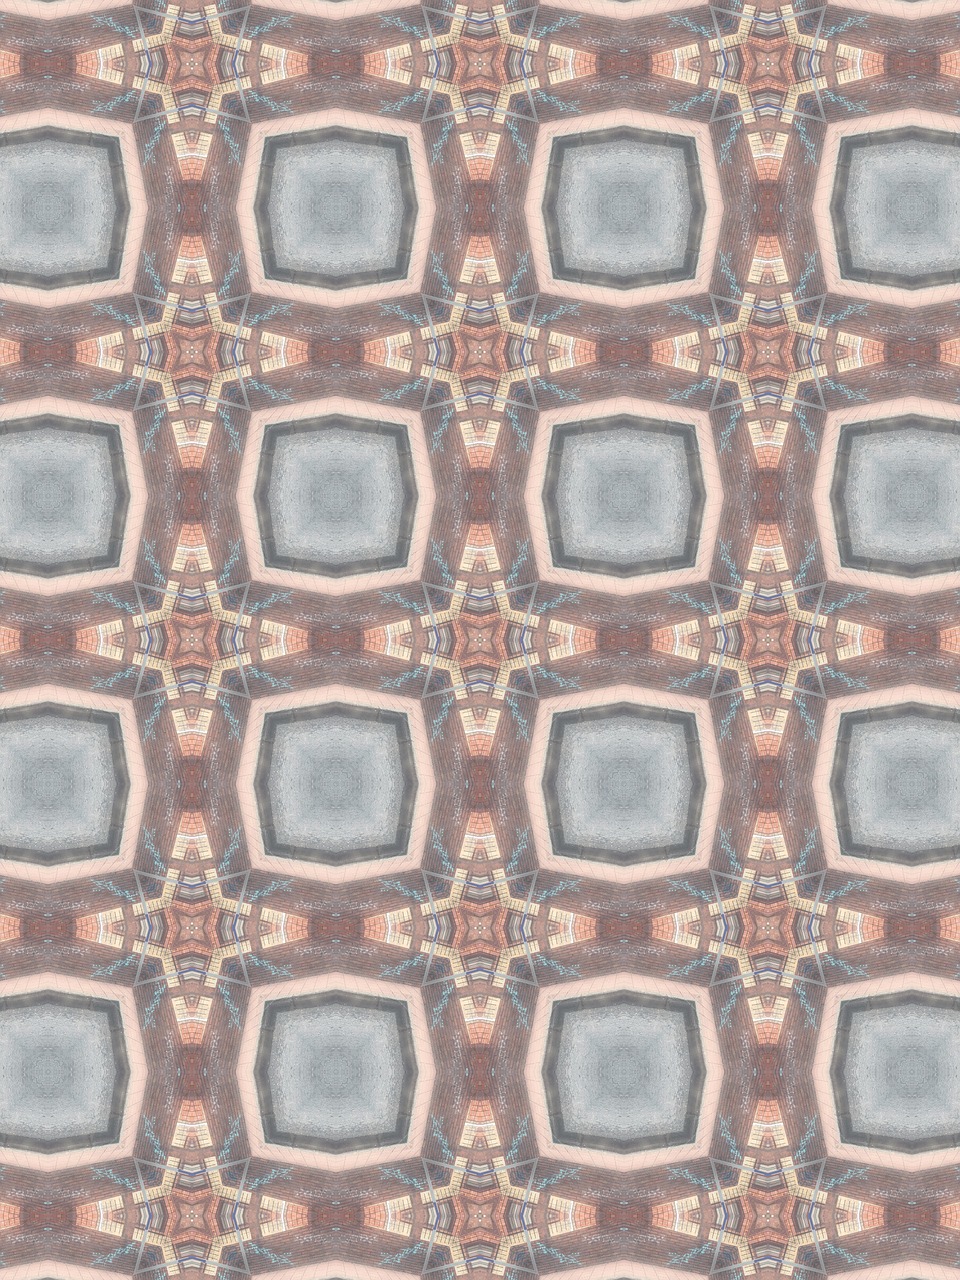 tile pattern moroccan free photo